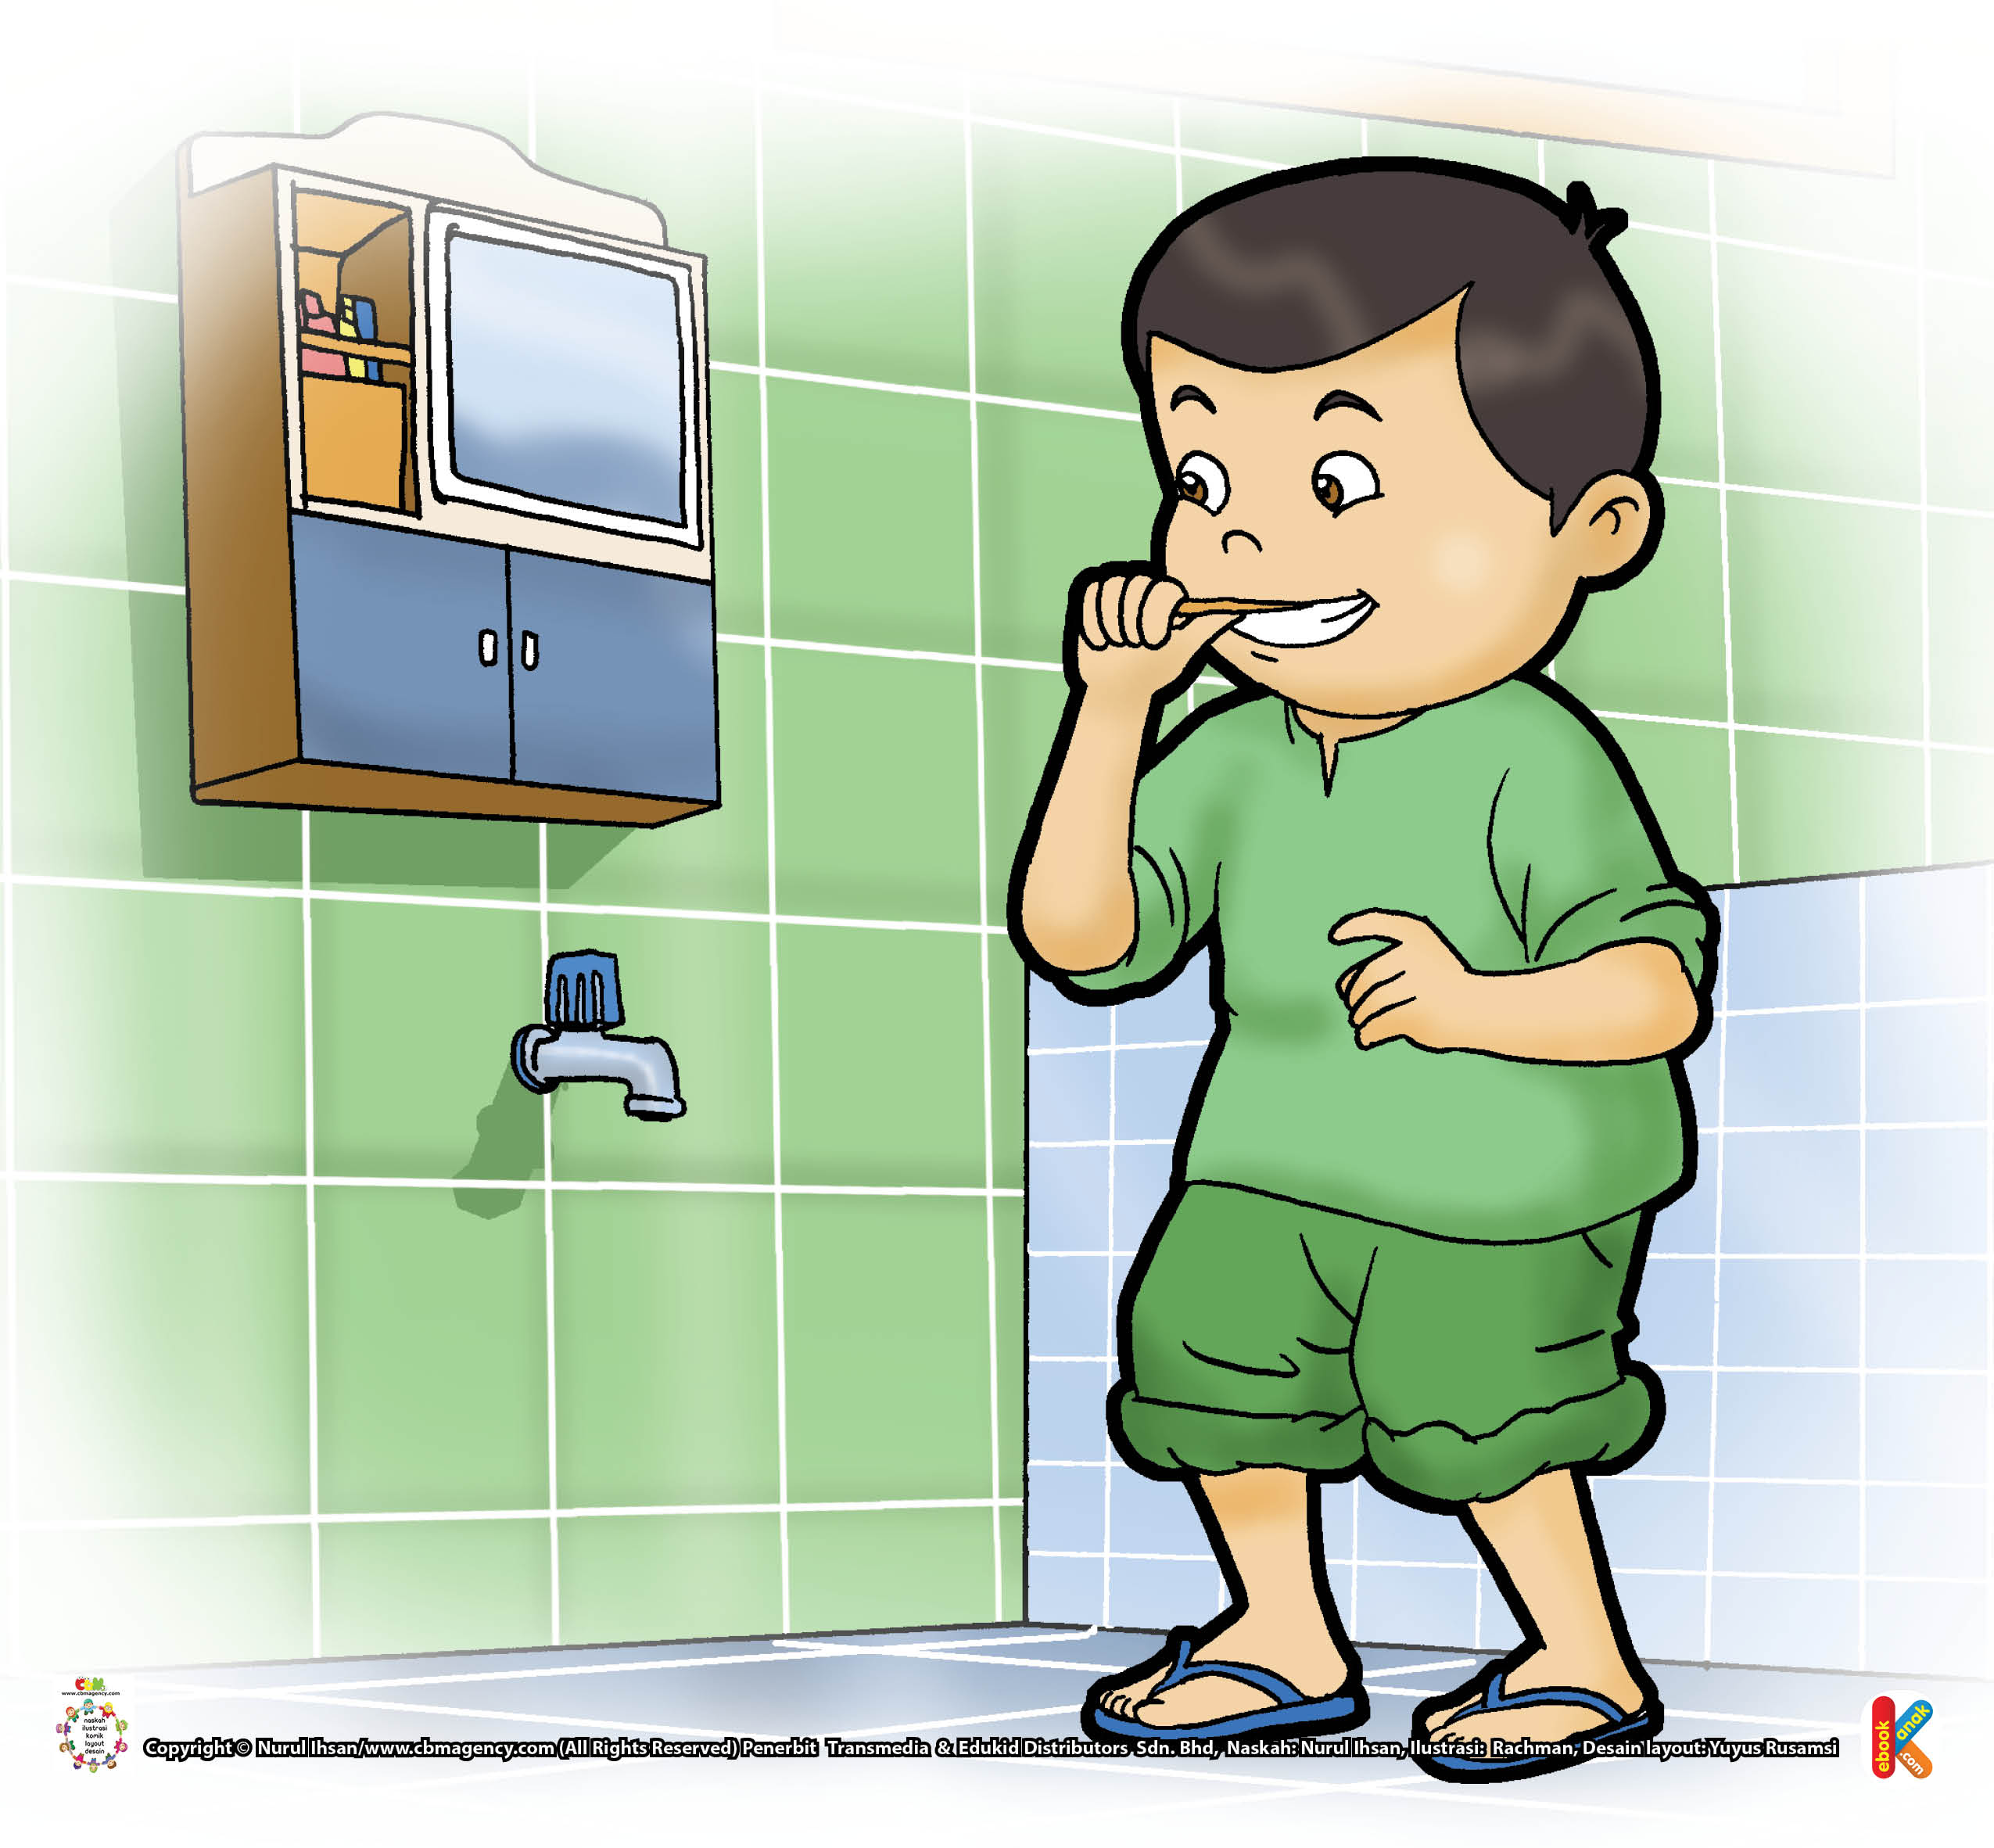 Mulai sekarang, biasakan juga menggosok gigi pada saat berwudhu sebelum shalat. Bersiwak sama dengan mengosok gigi. Pada zaman Rasulullah Saw, menggosok gigi itu disebut juga bersiwak.